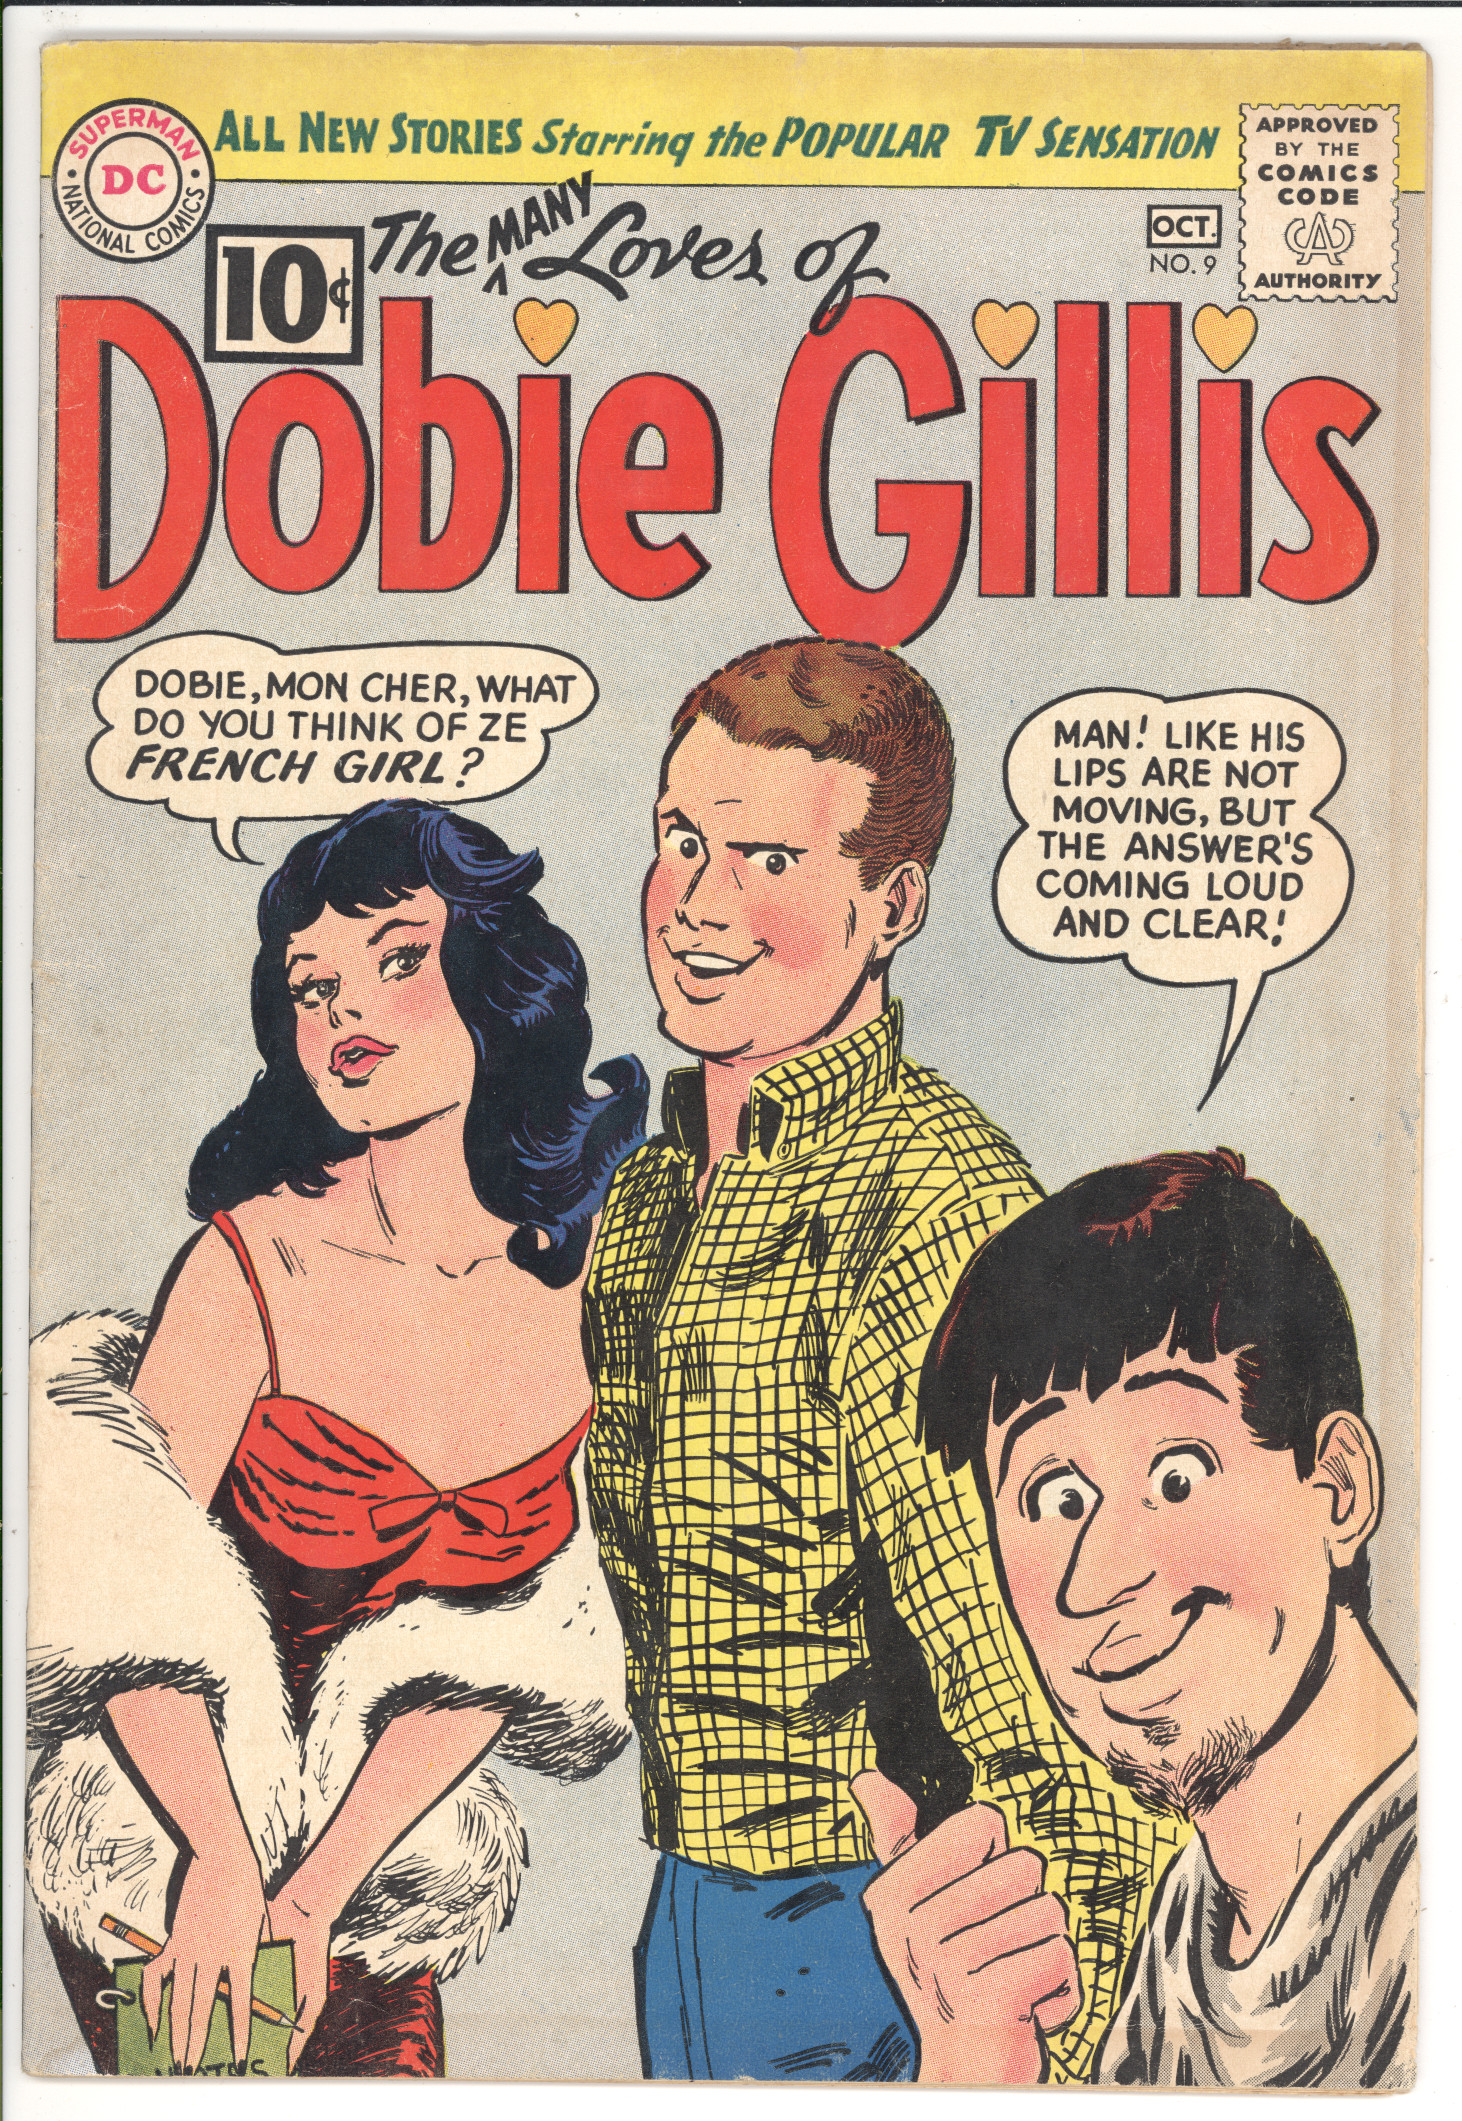 Many Lovers of Dobie Gillis #9 front